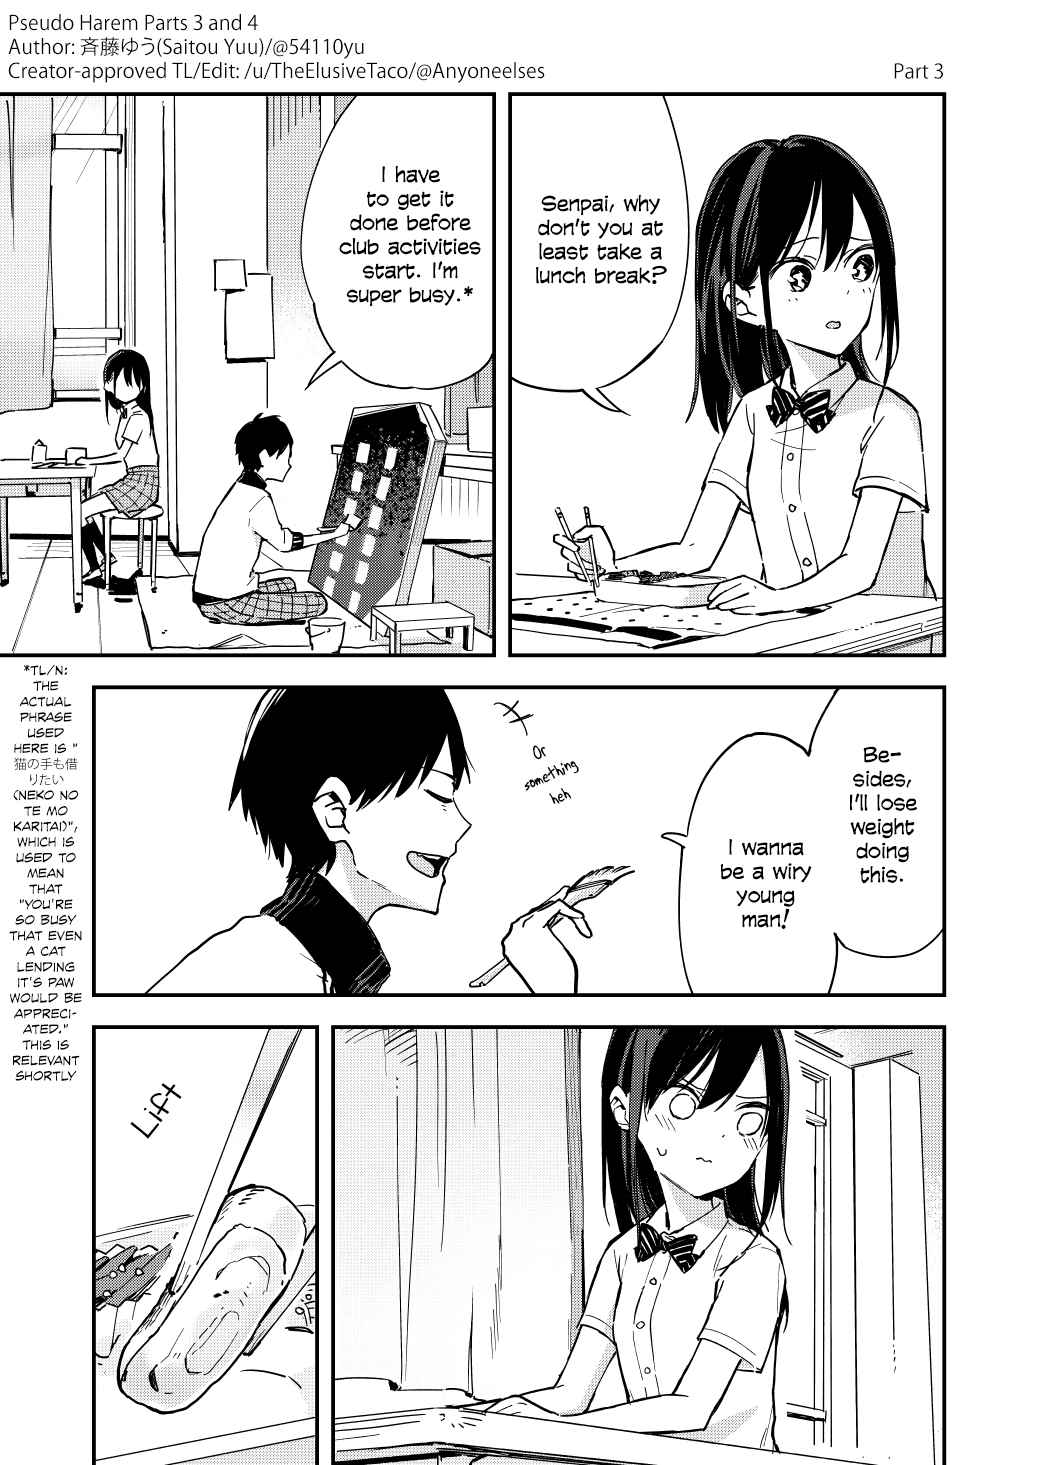 Saitou Yuu's Short Manga Ch. 2 Parts 3 and 4